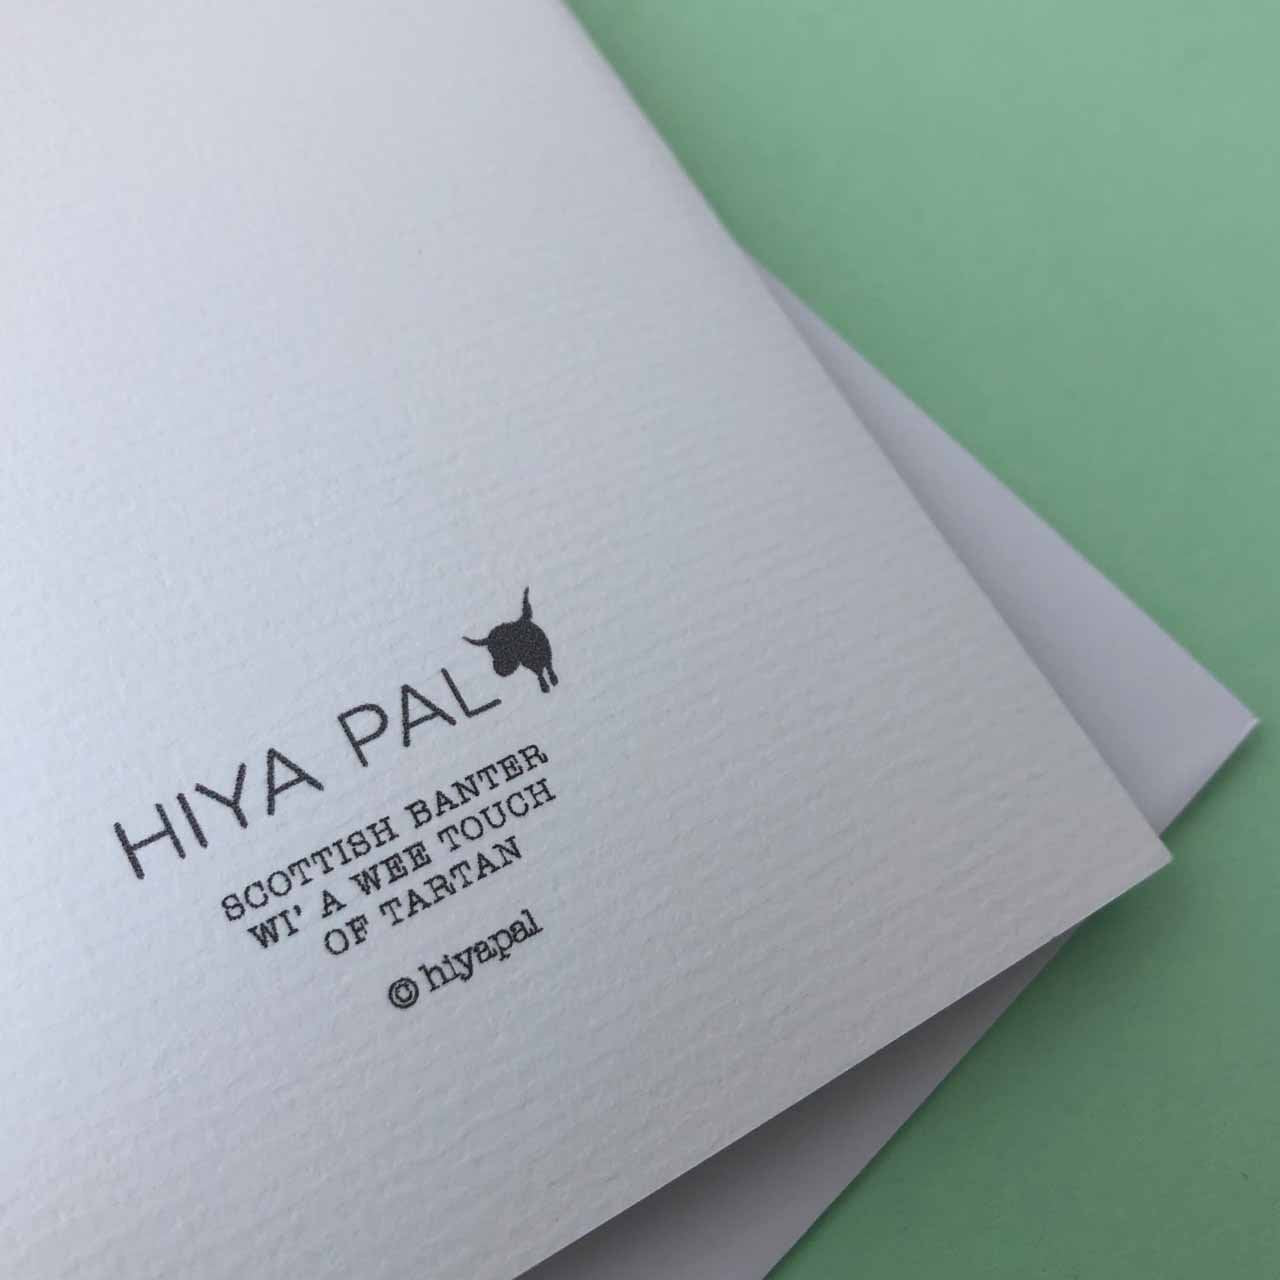 'Ya Wee Star' Handmade Scottish Cards Made in Scotland by Hiya Pal